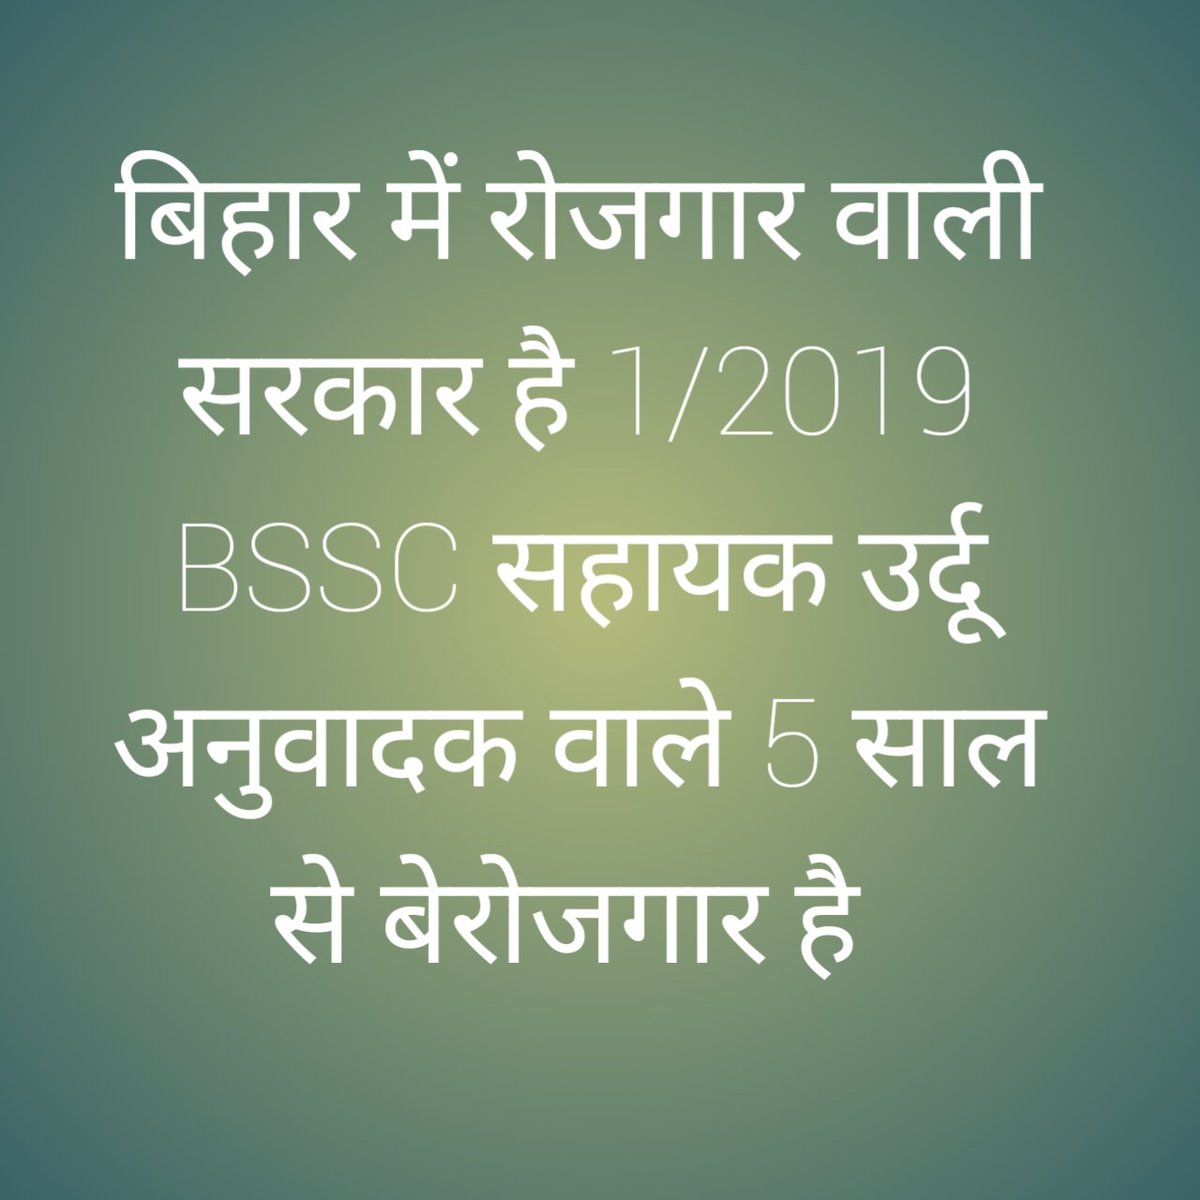 #ReleaseBsscAsst_UrduMeritList 

Please BSSC final merit list Release kare